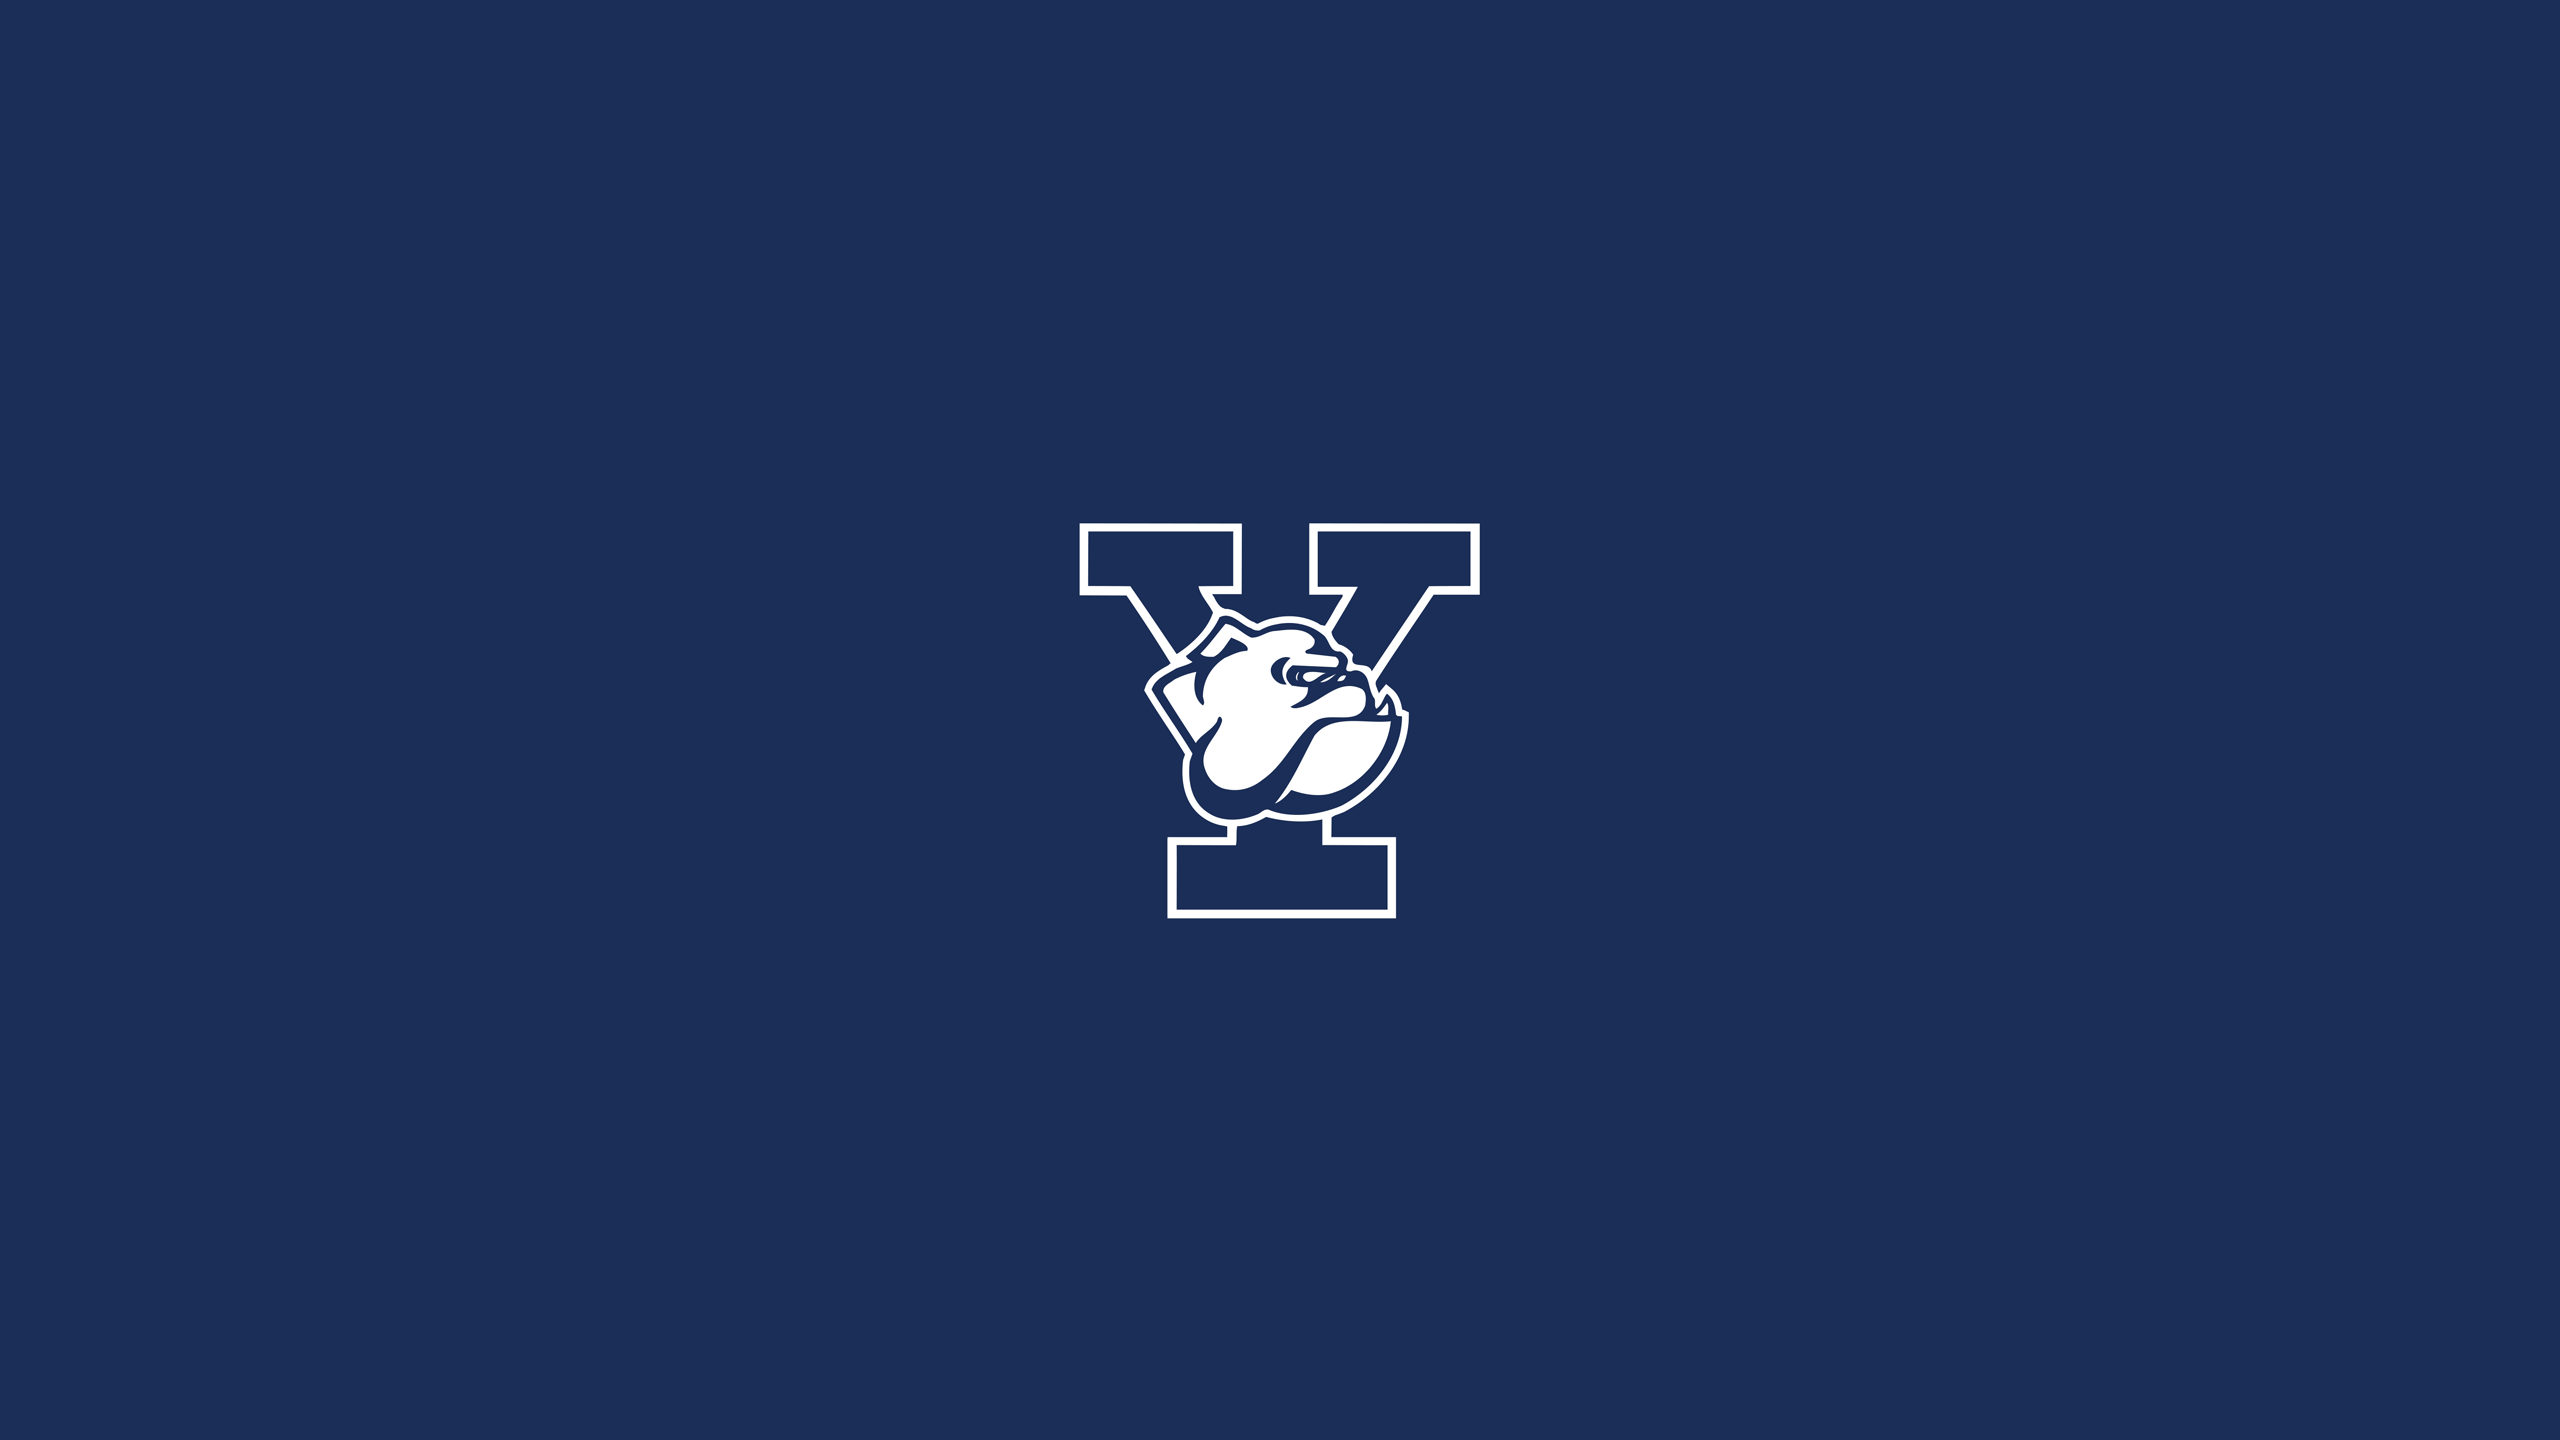 Yale Bulldogs Basketball - NCAAB - Square Bettor